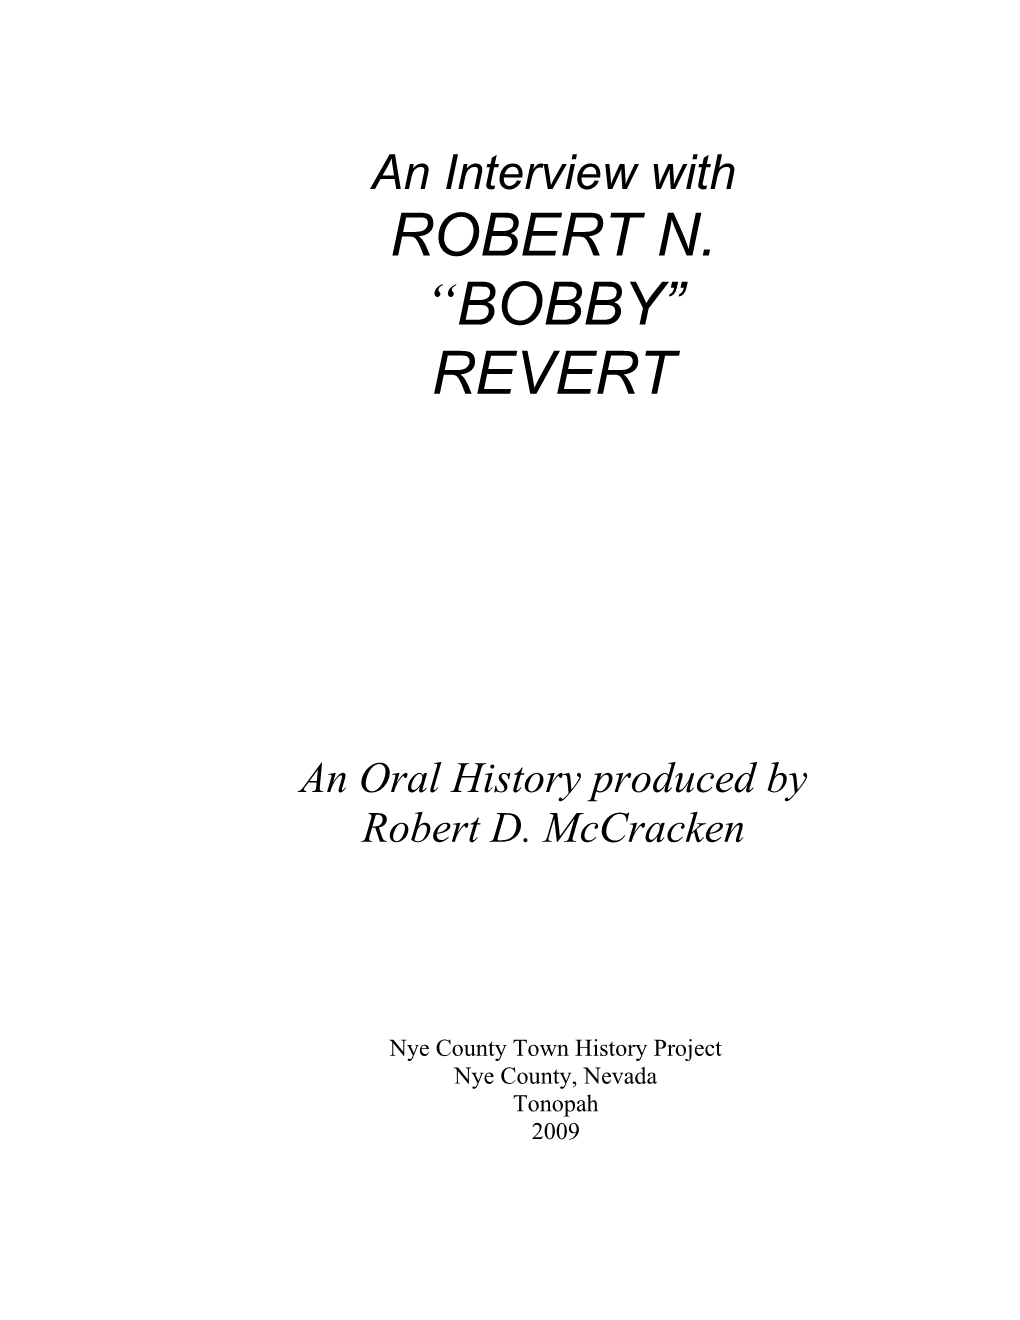 Interview With Bobby Revert And Robert Mccraken April 16, 2008